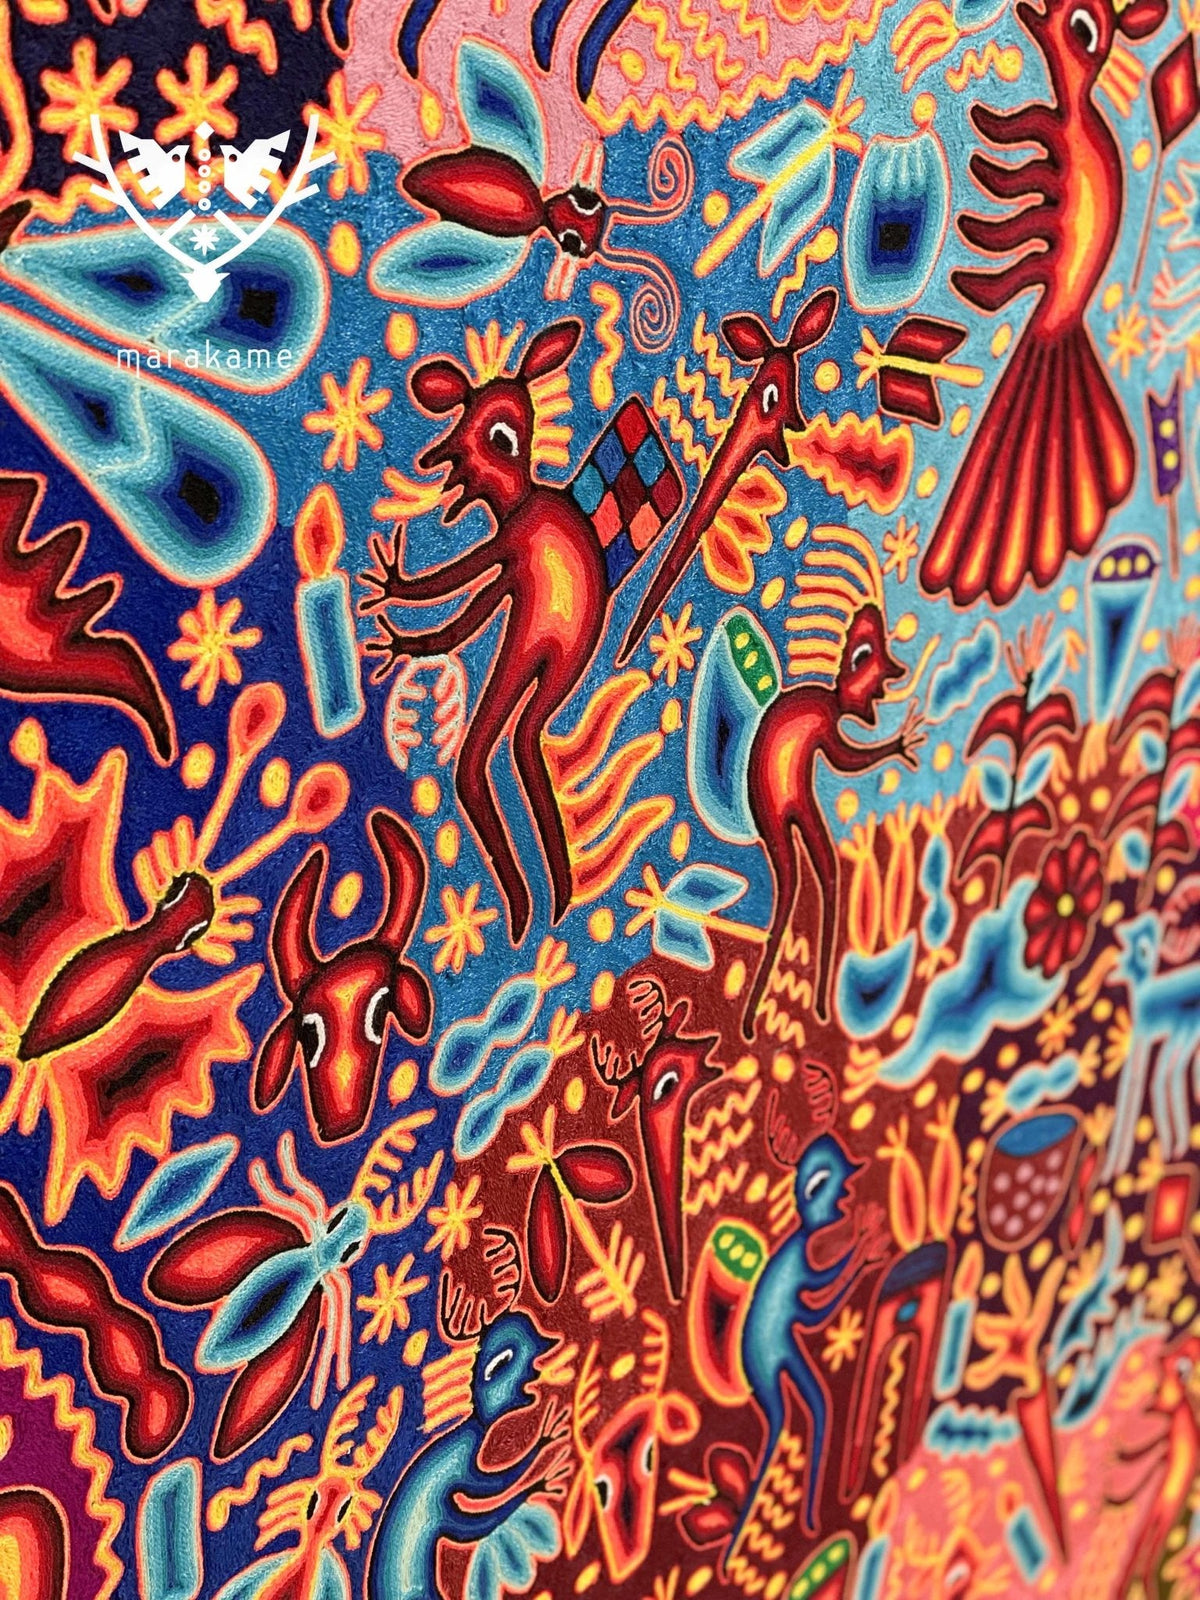 Nierika de Estambre Cuadro Huichol - Tura hirie - 150 x 120 cm. - Arte Huichol - Marakame